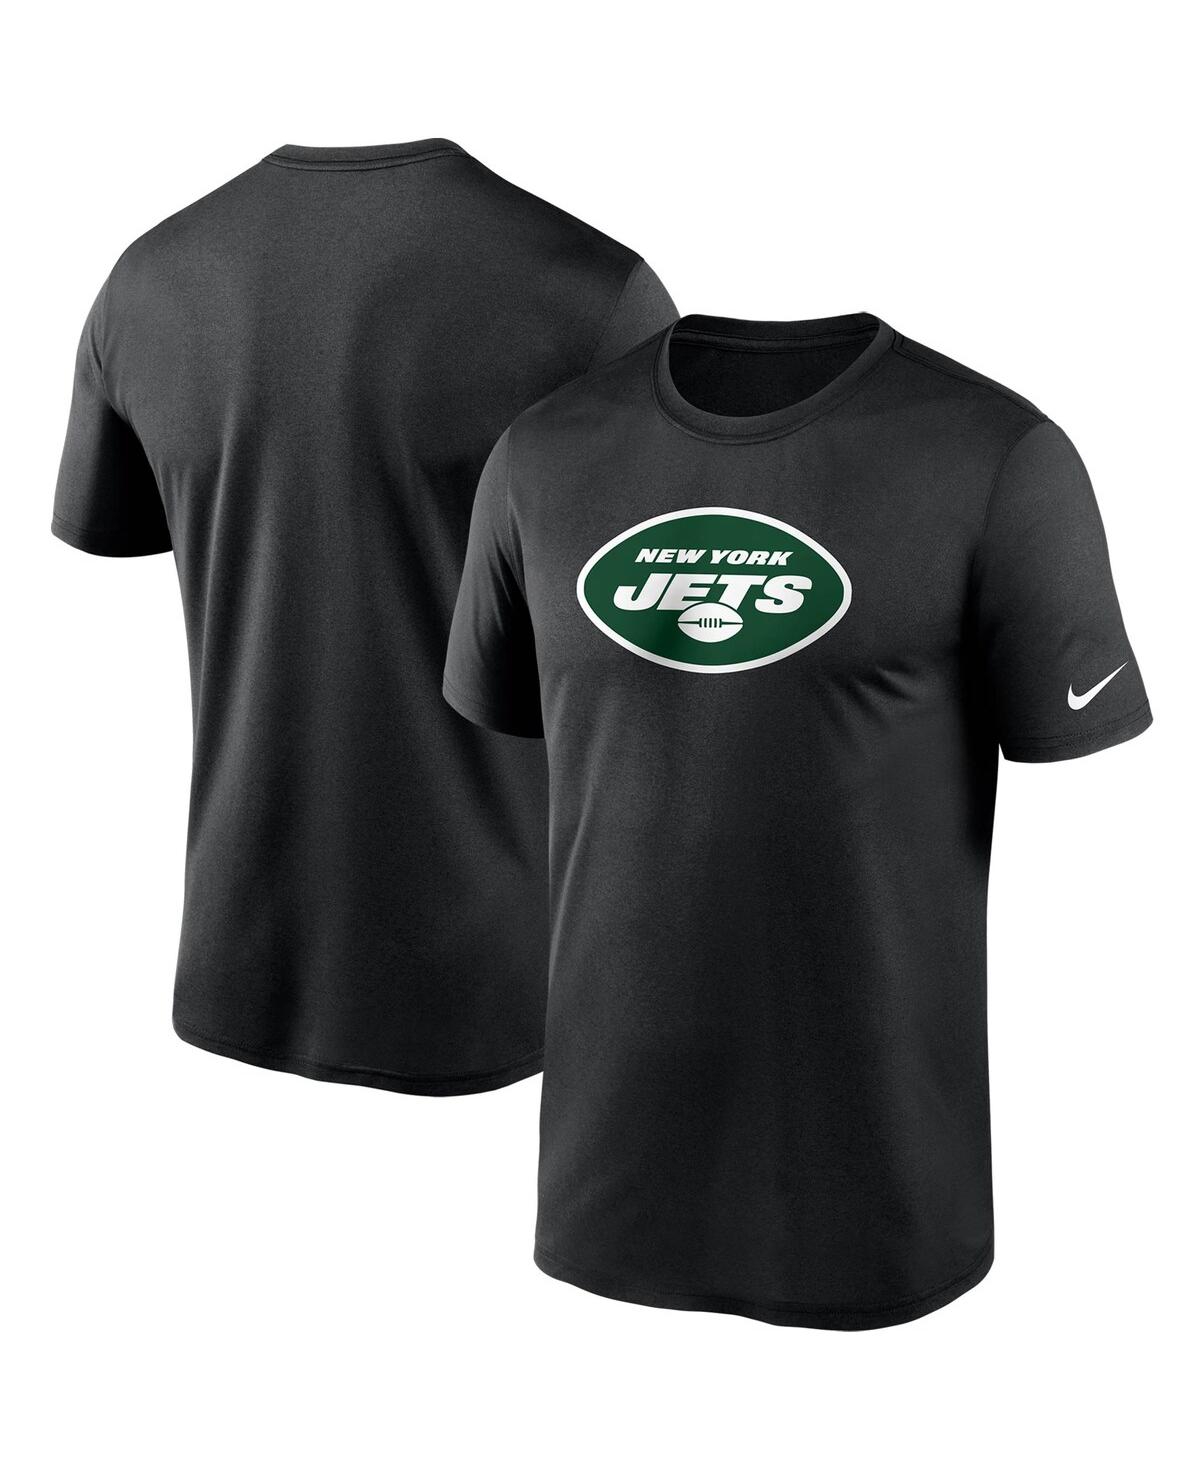 Men's Nike Black New York Jets Logo Essential Legend Performance T-shirt